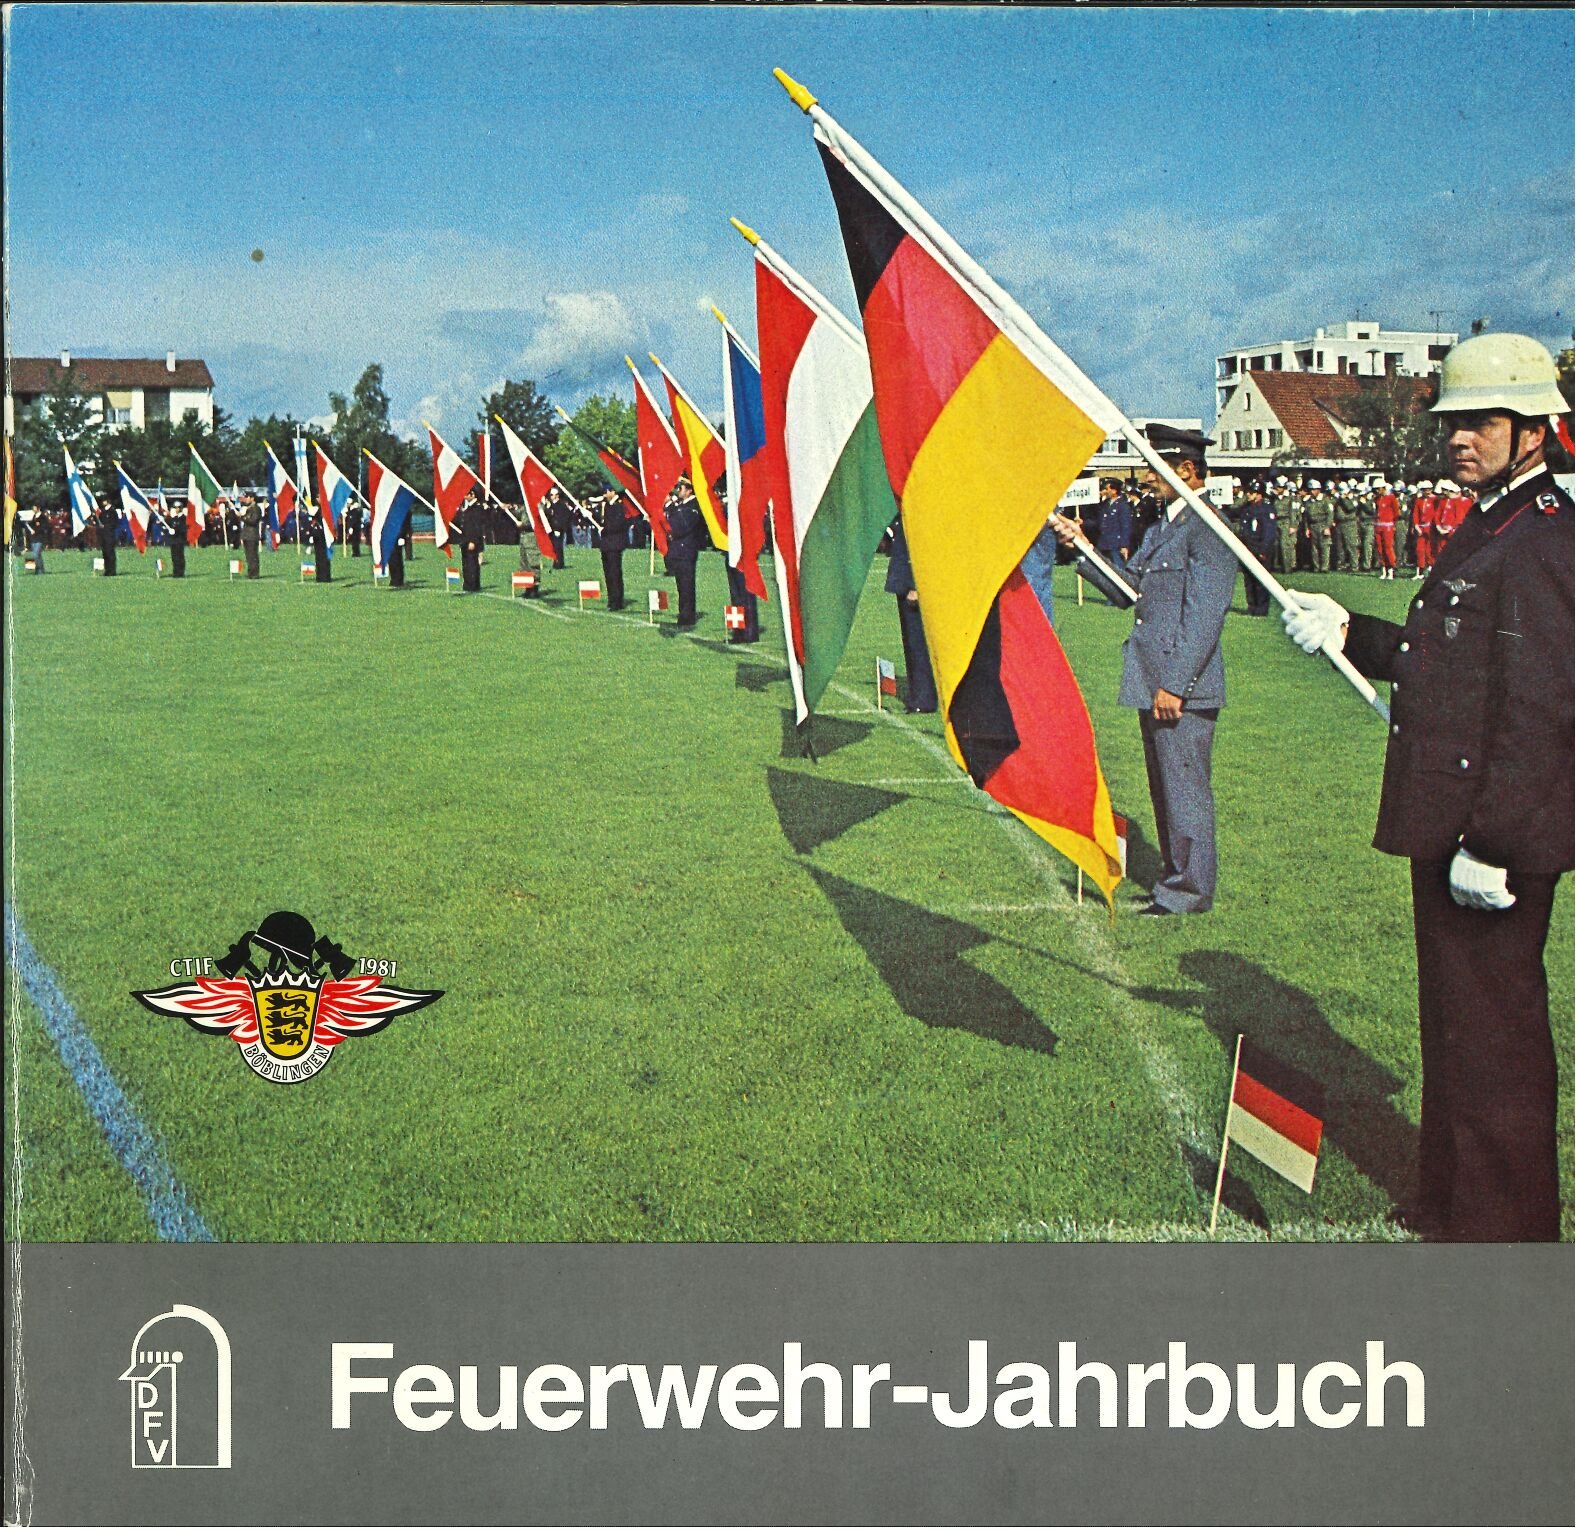 Feuerwehr-Jahrbuch 1981/82 (Feuerwehrmuseum Grethen CC BY-NC-SA)